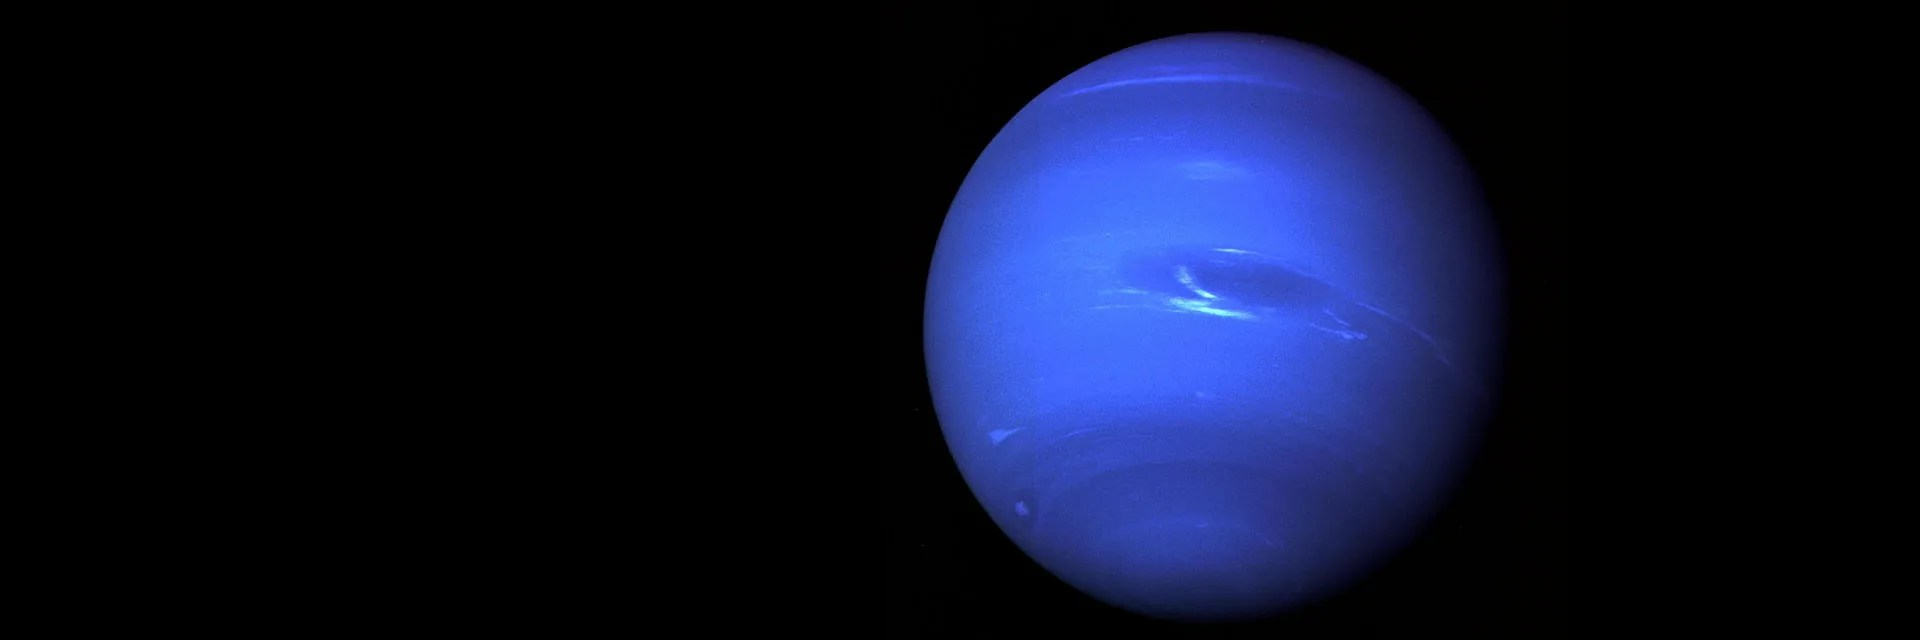 Full globe image of Neptune against the blackness of space.